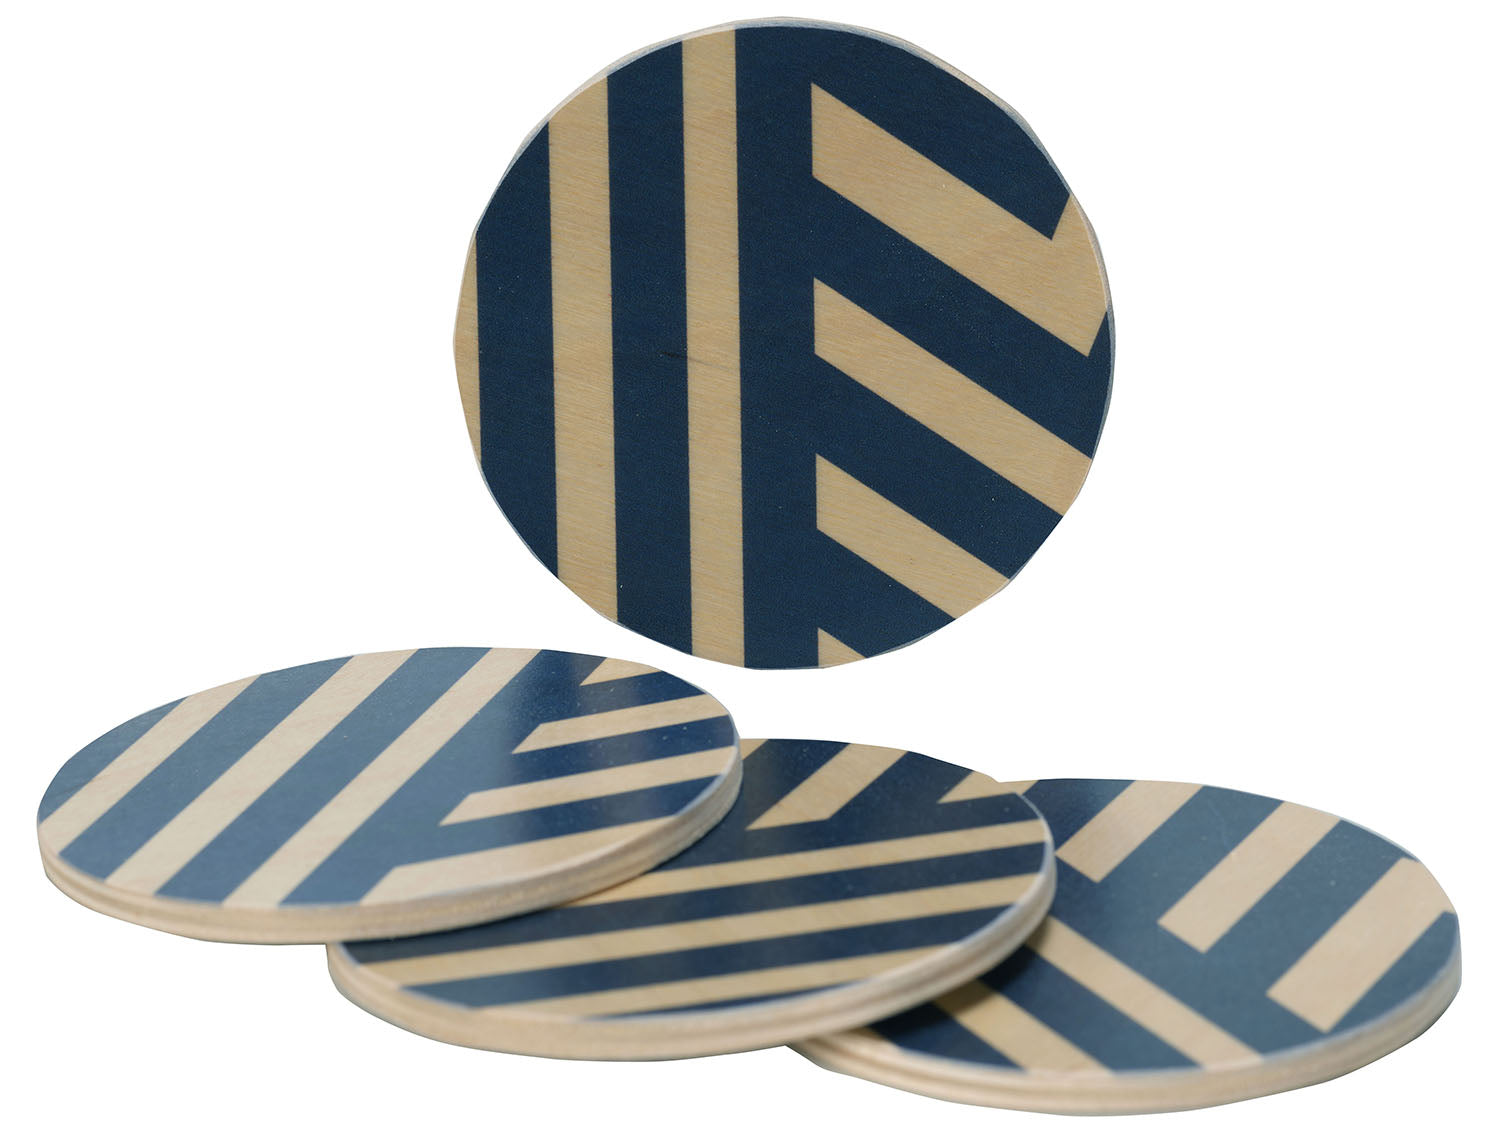 Teal stripe coasters, set of four